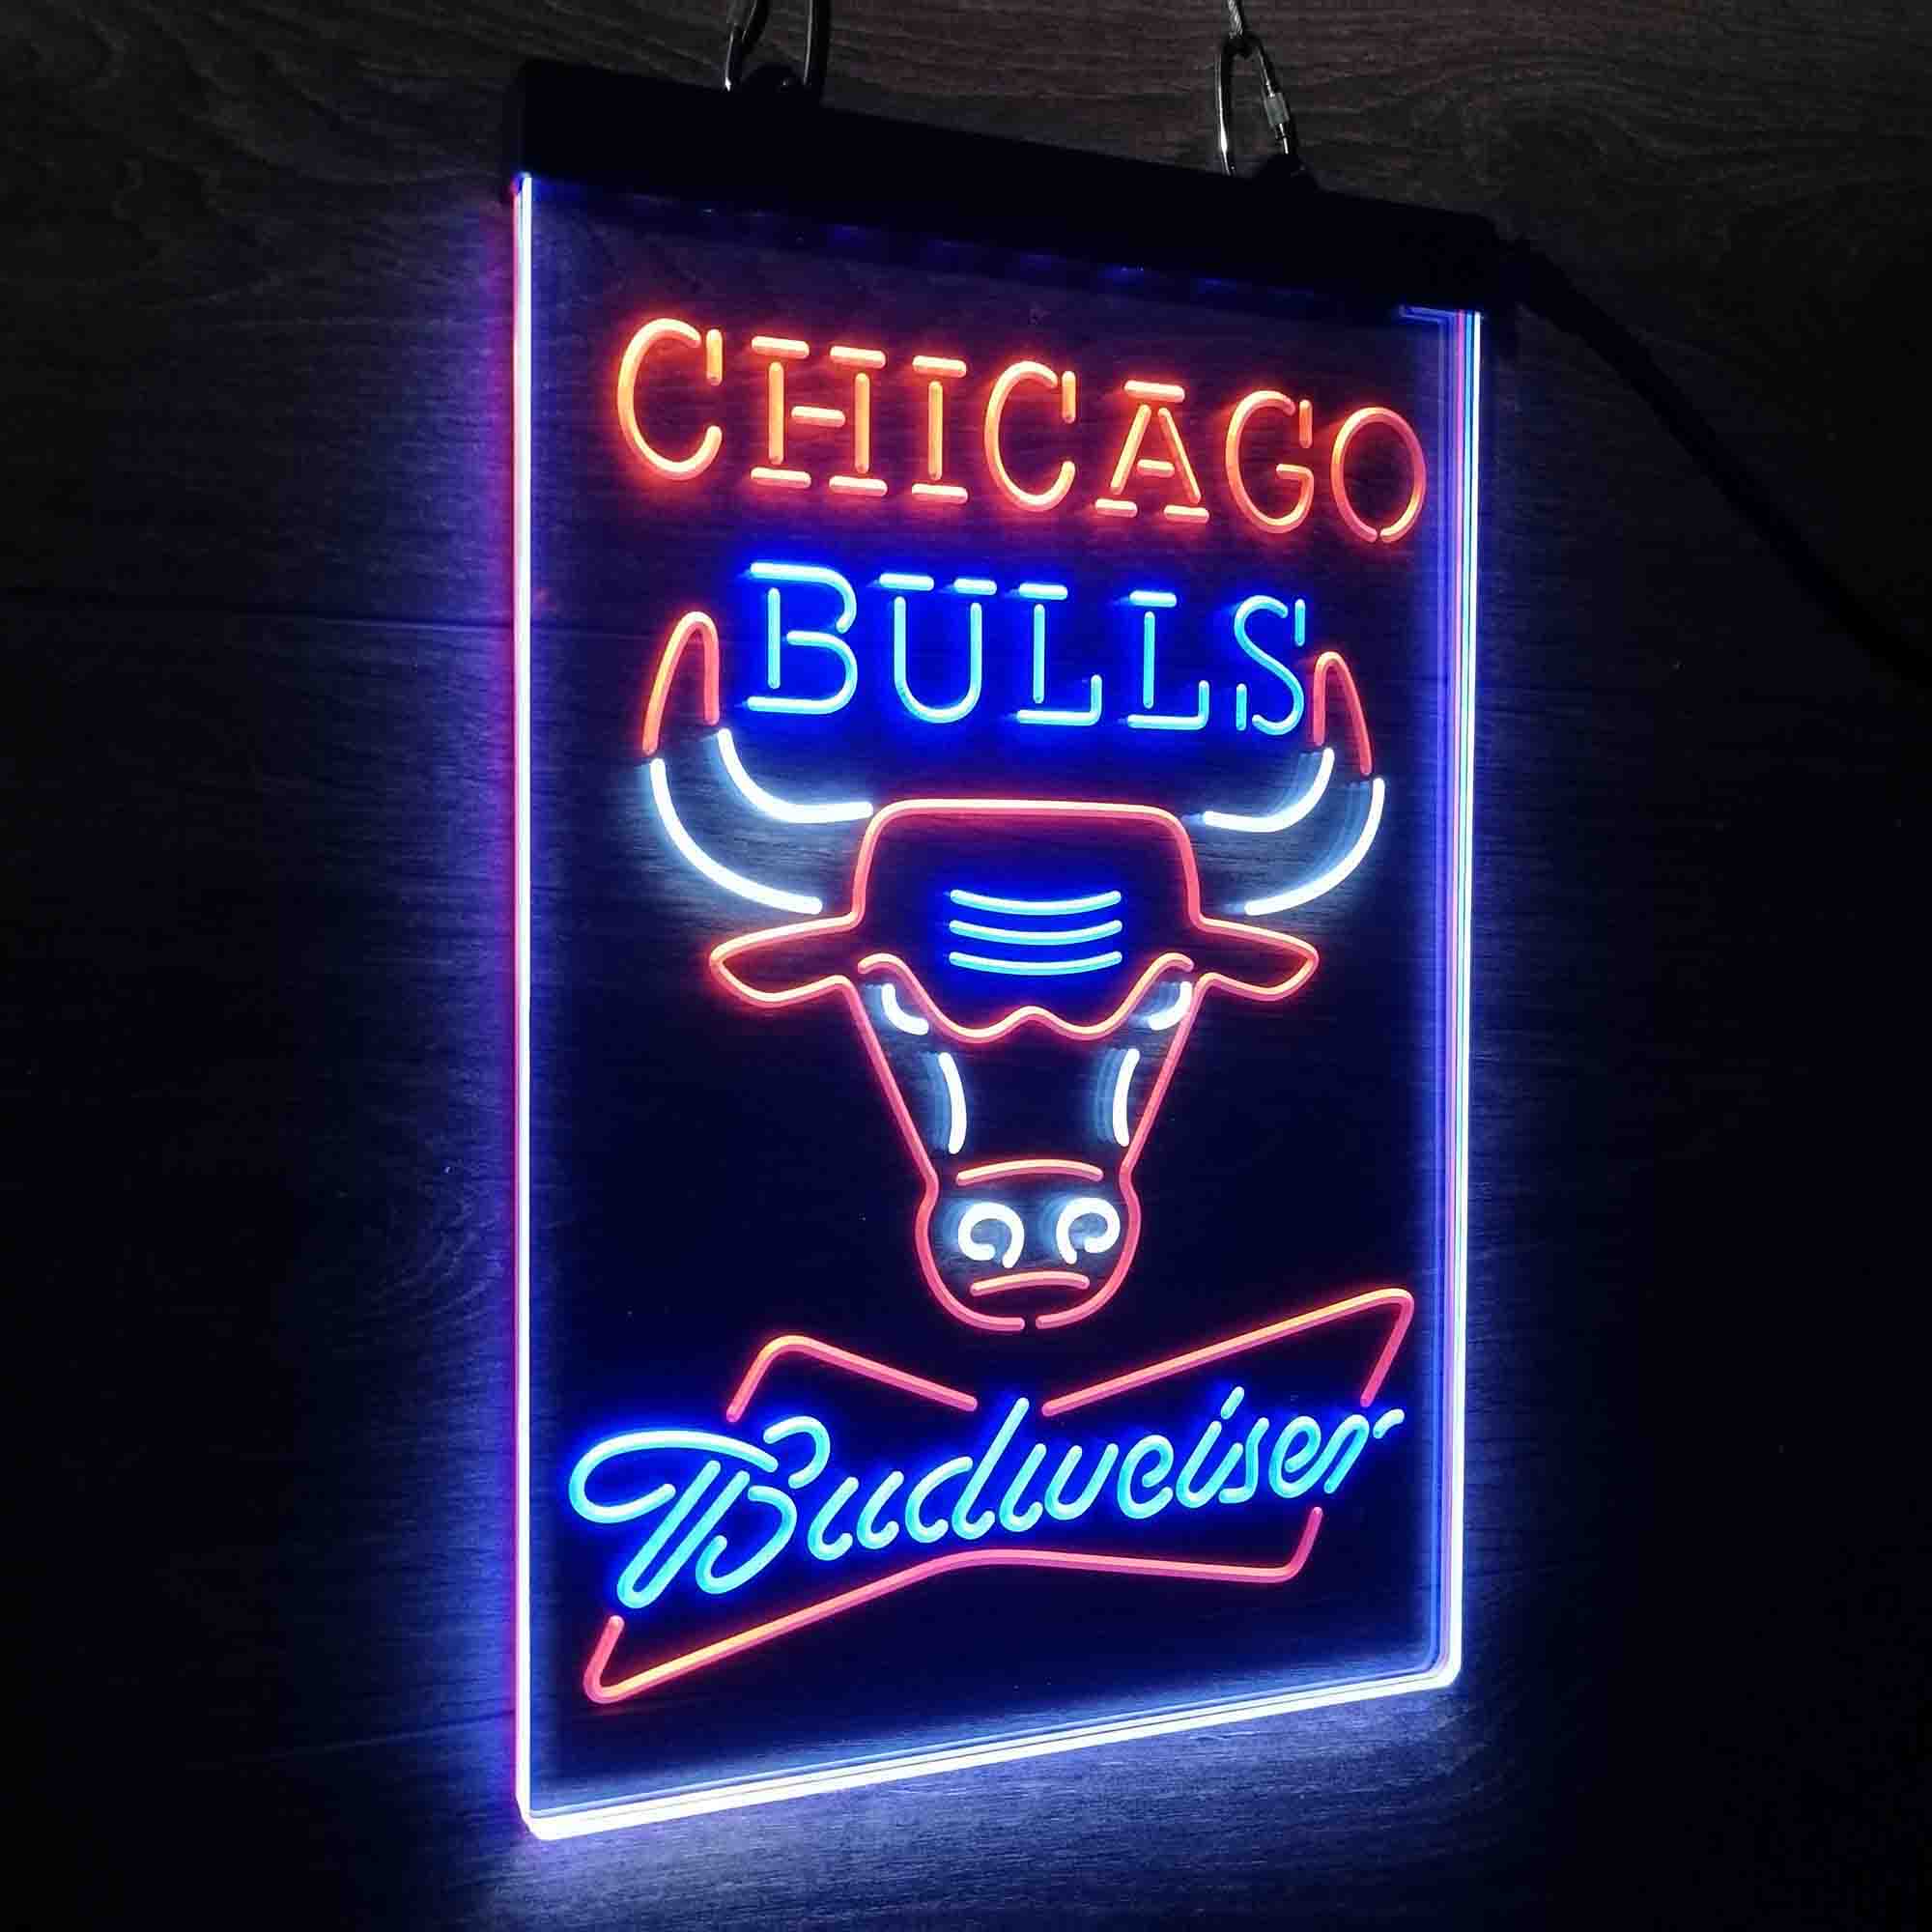 Chicago Bulls Nba Budweiser Neon LED Sign 3 Colors